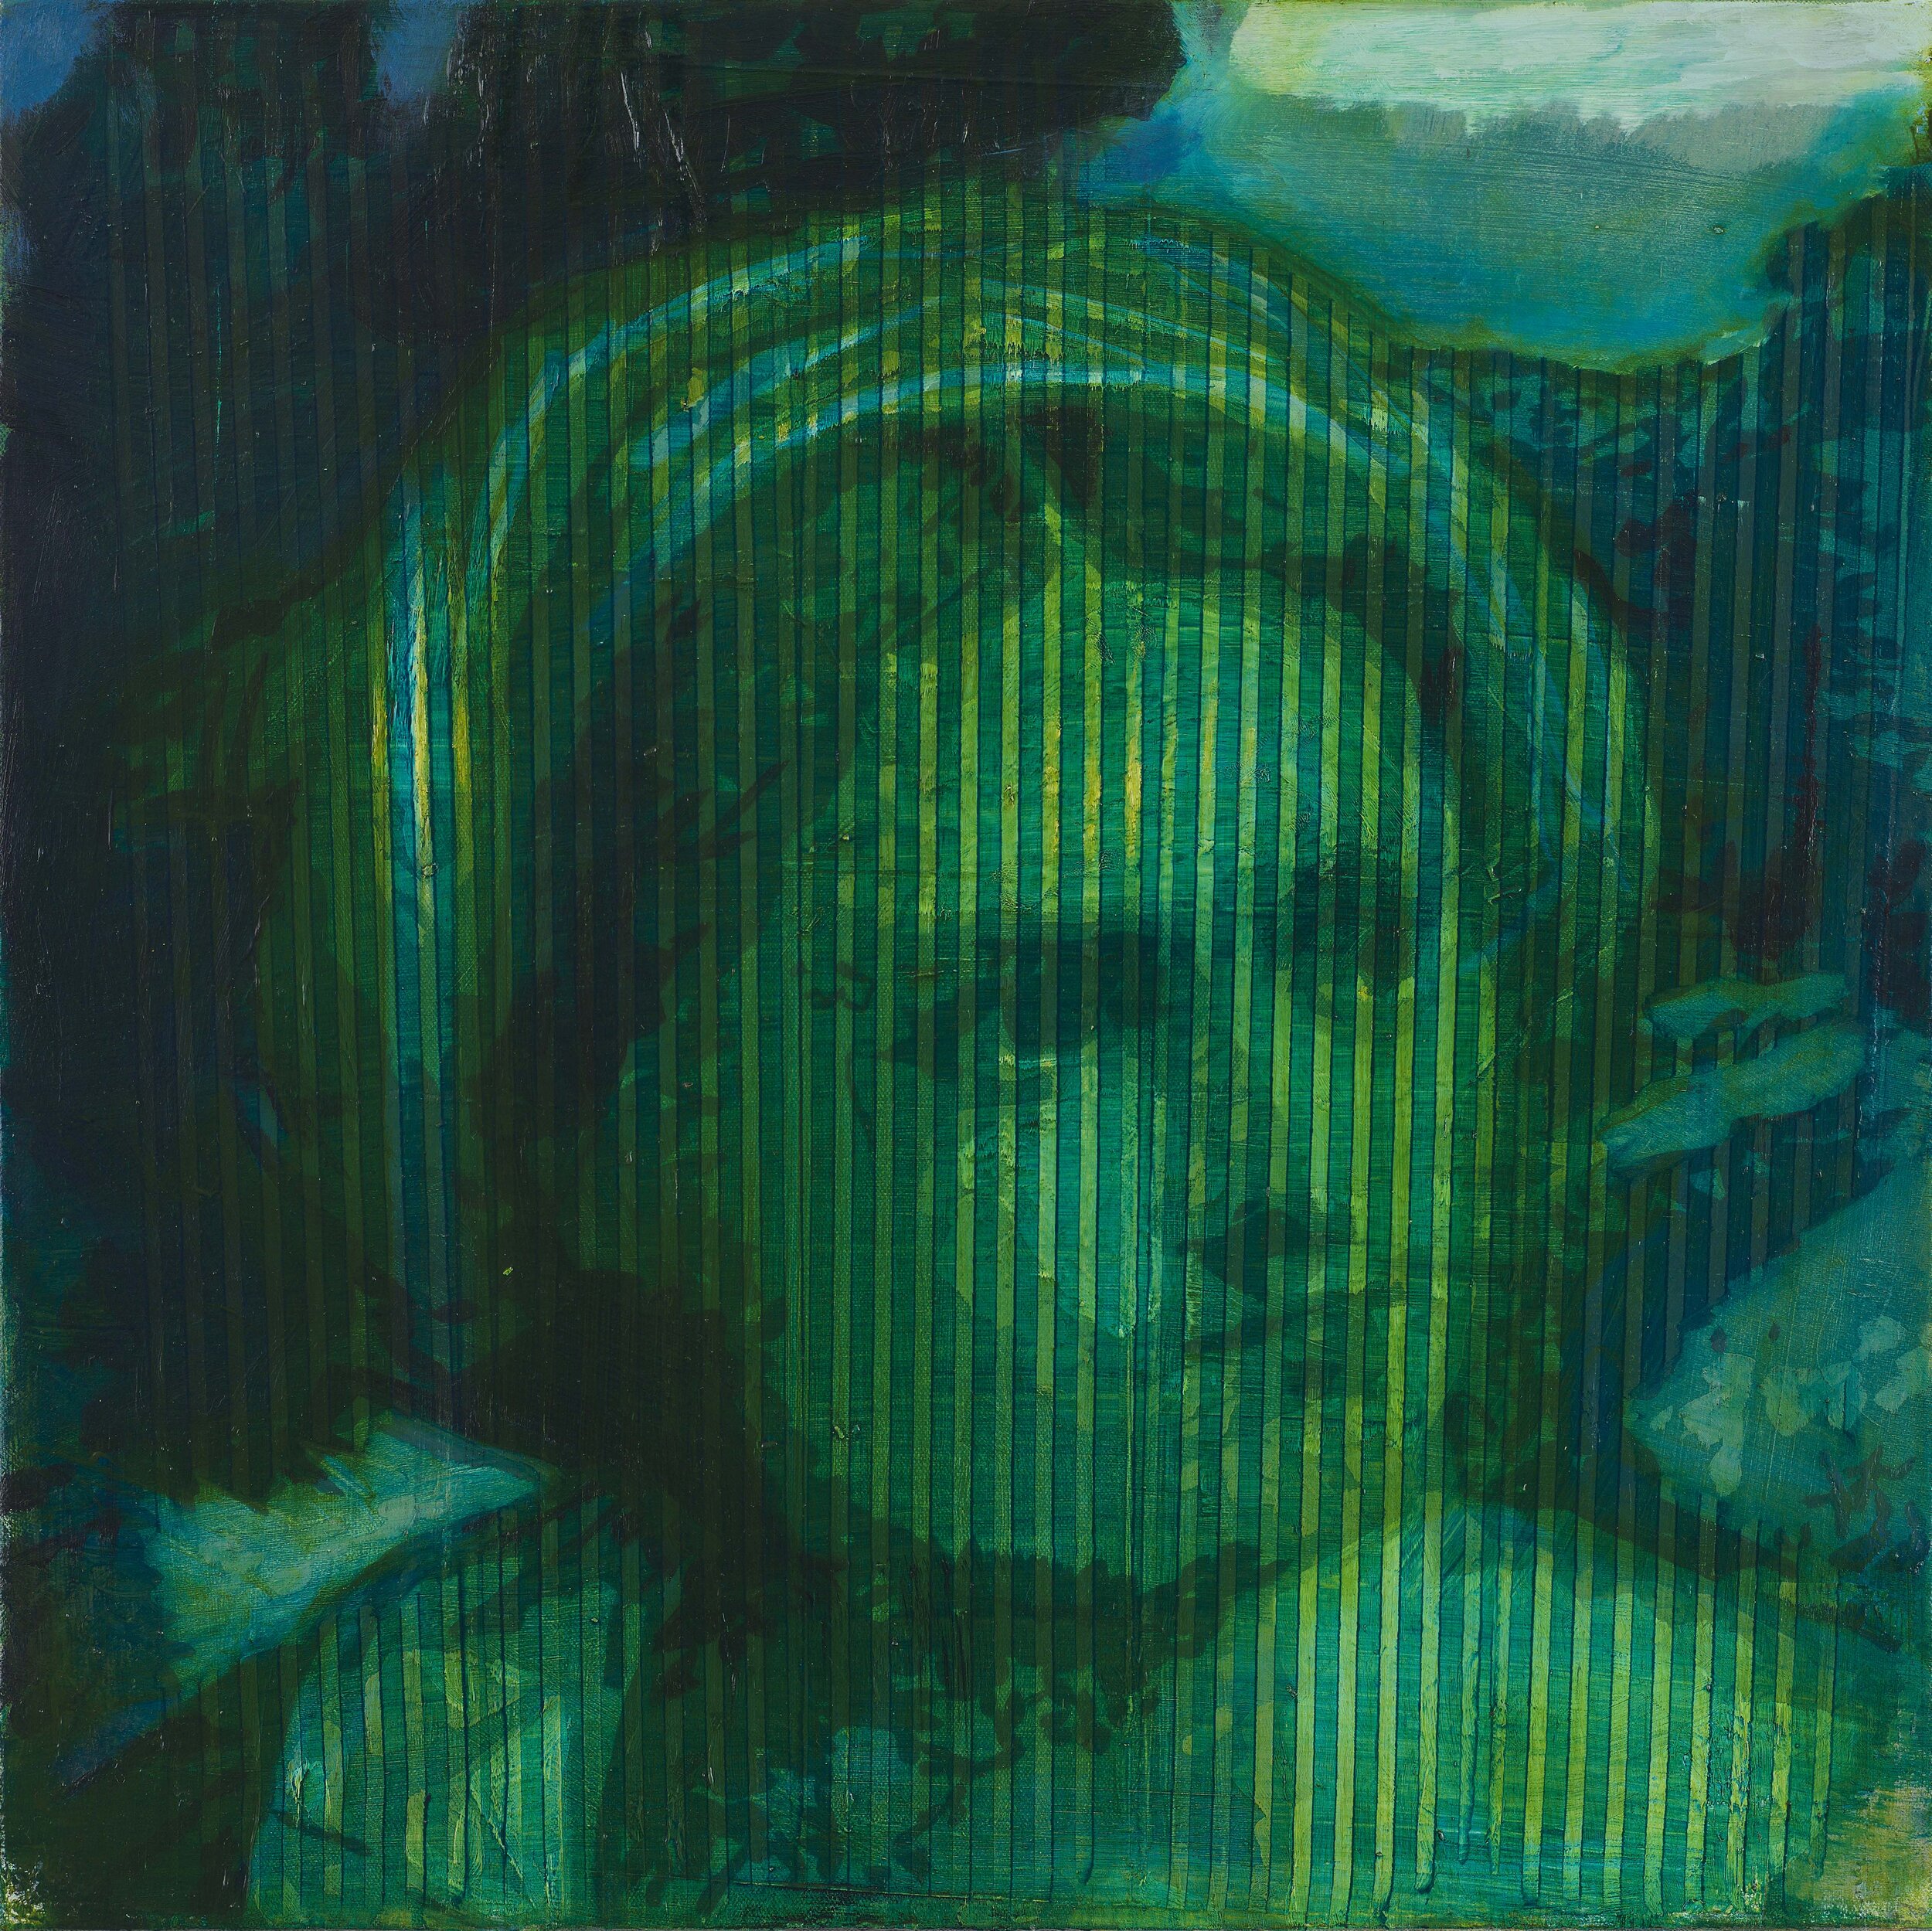 Listener (2015), oil on canvas, 50x50 cm